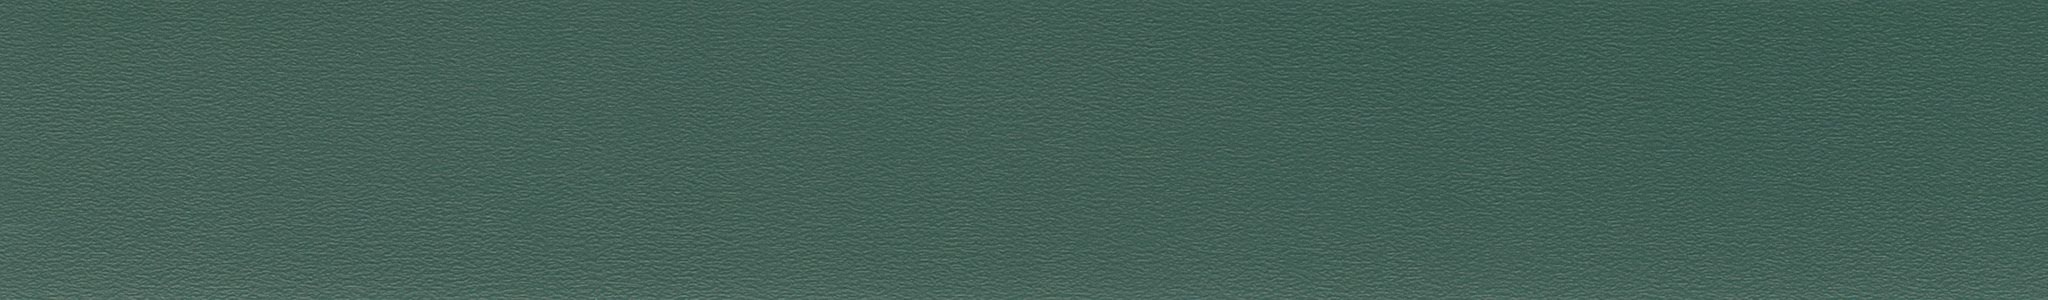 ABS K520 SU Dark Emerald 22x2mm HU 160520